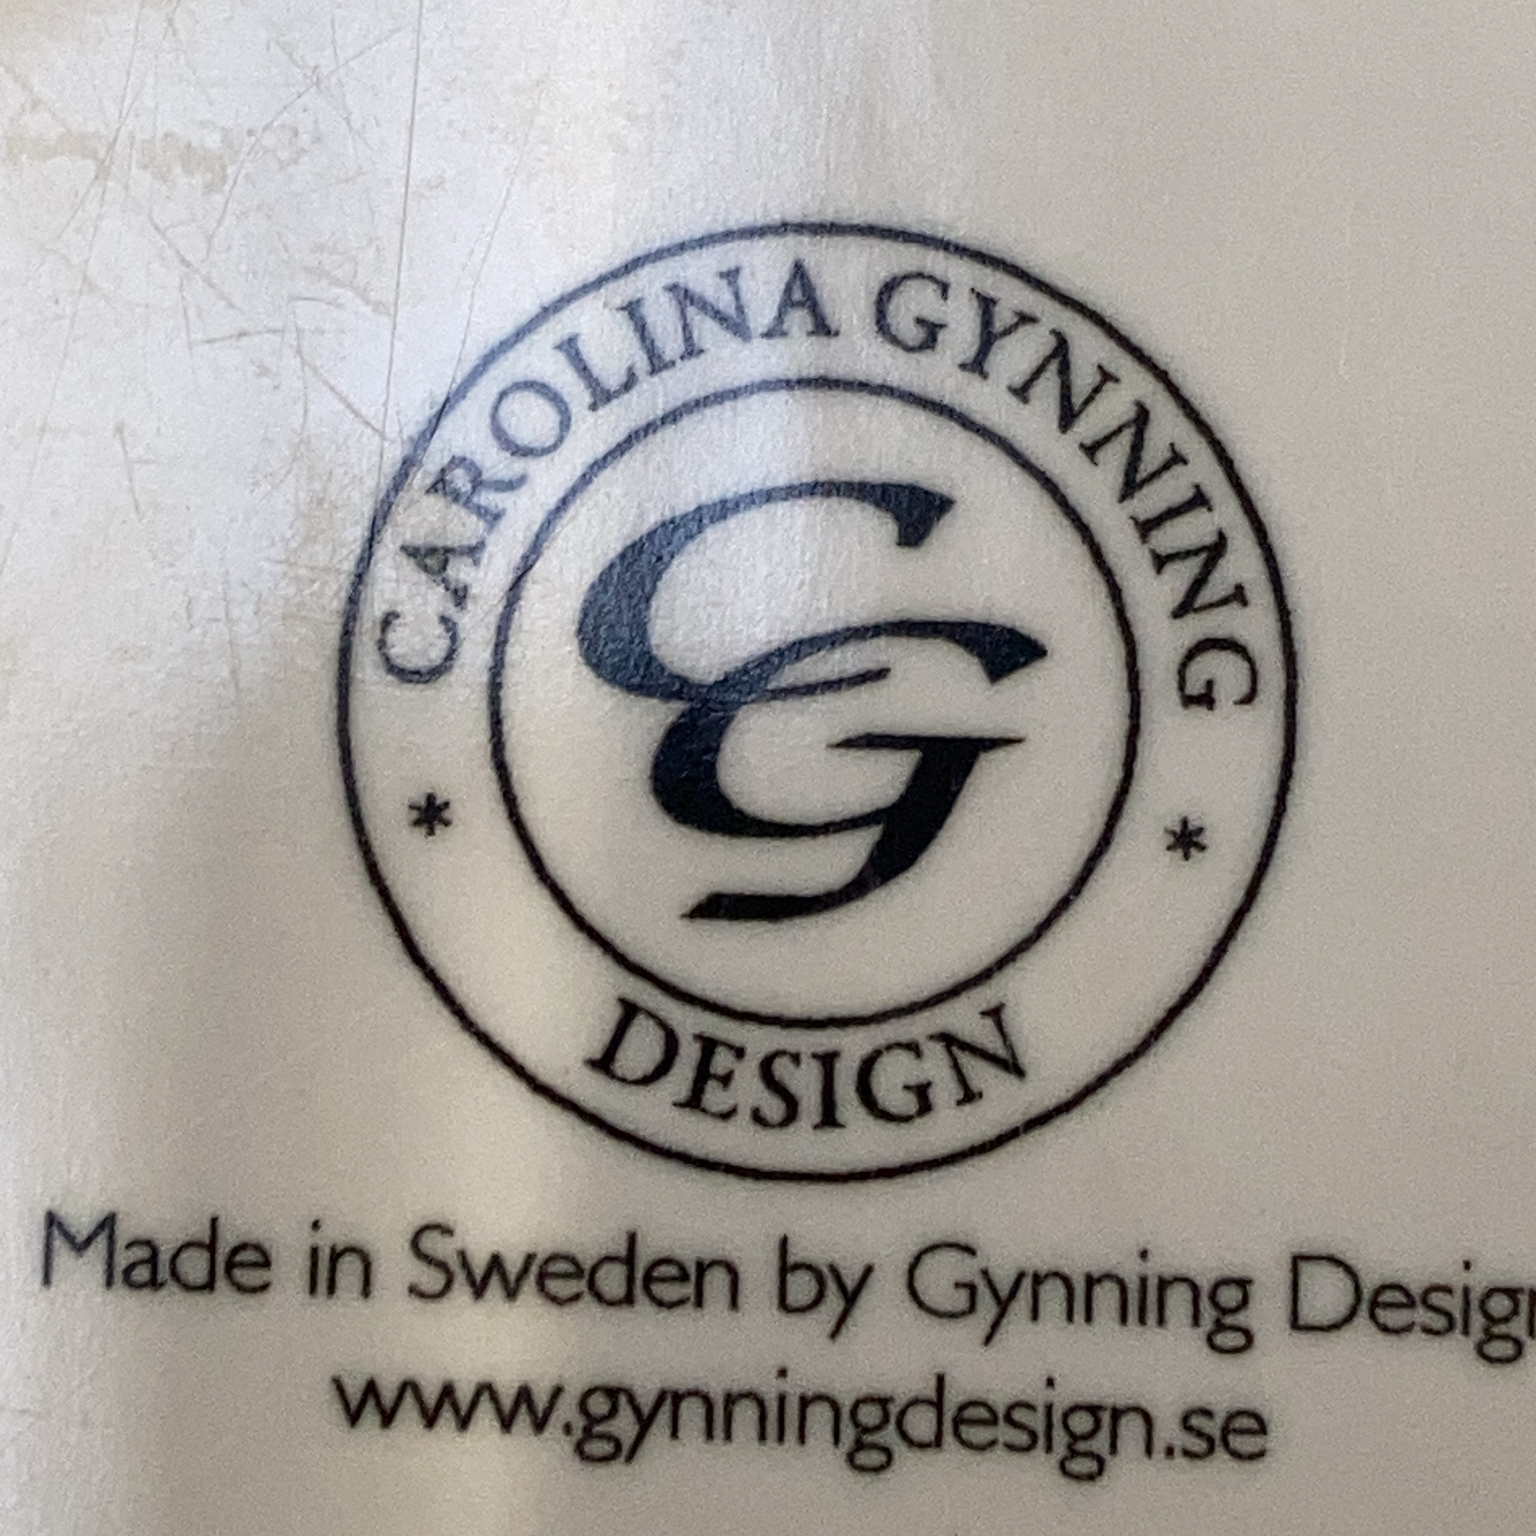 Carolina Gynning Design